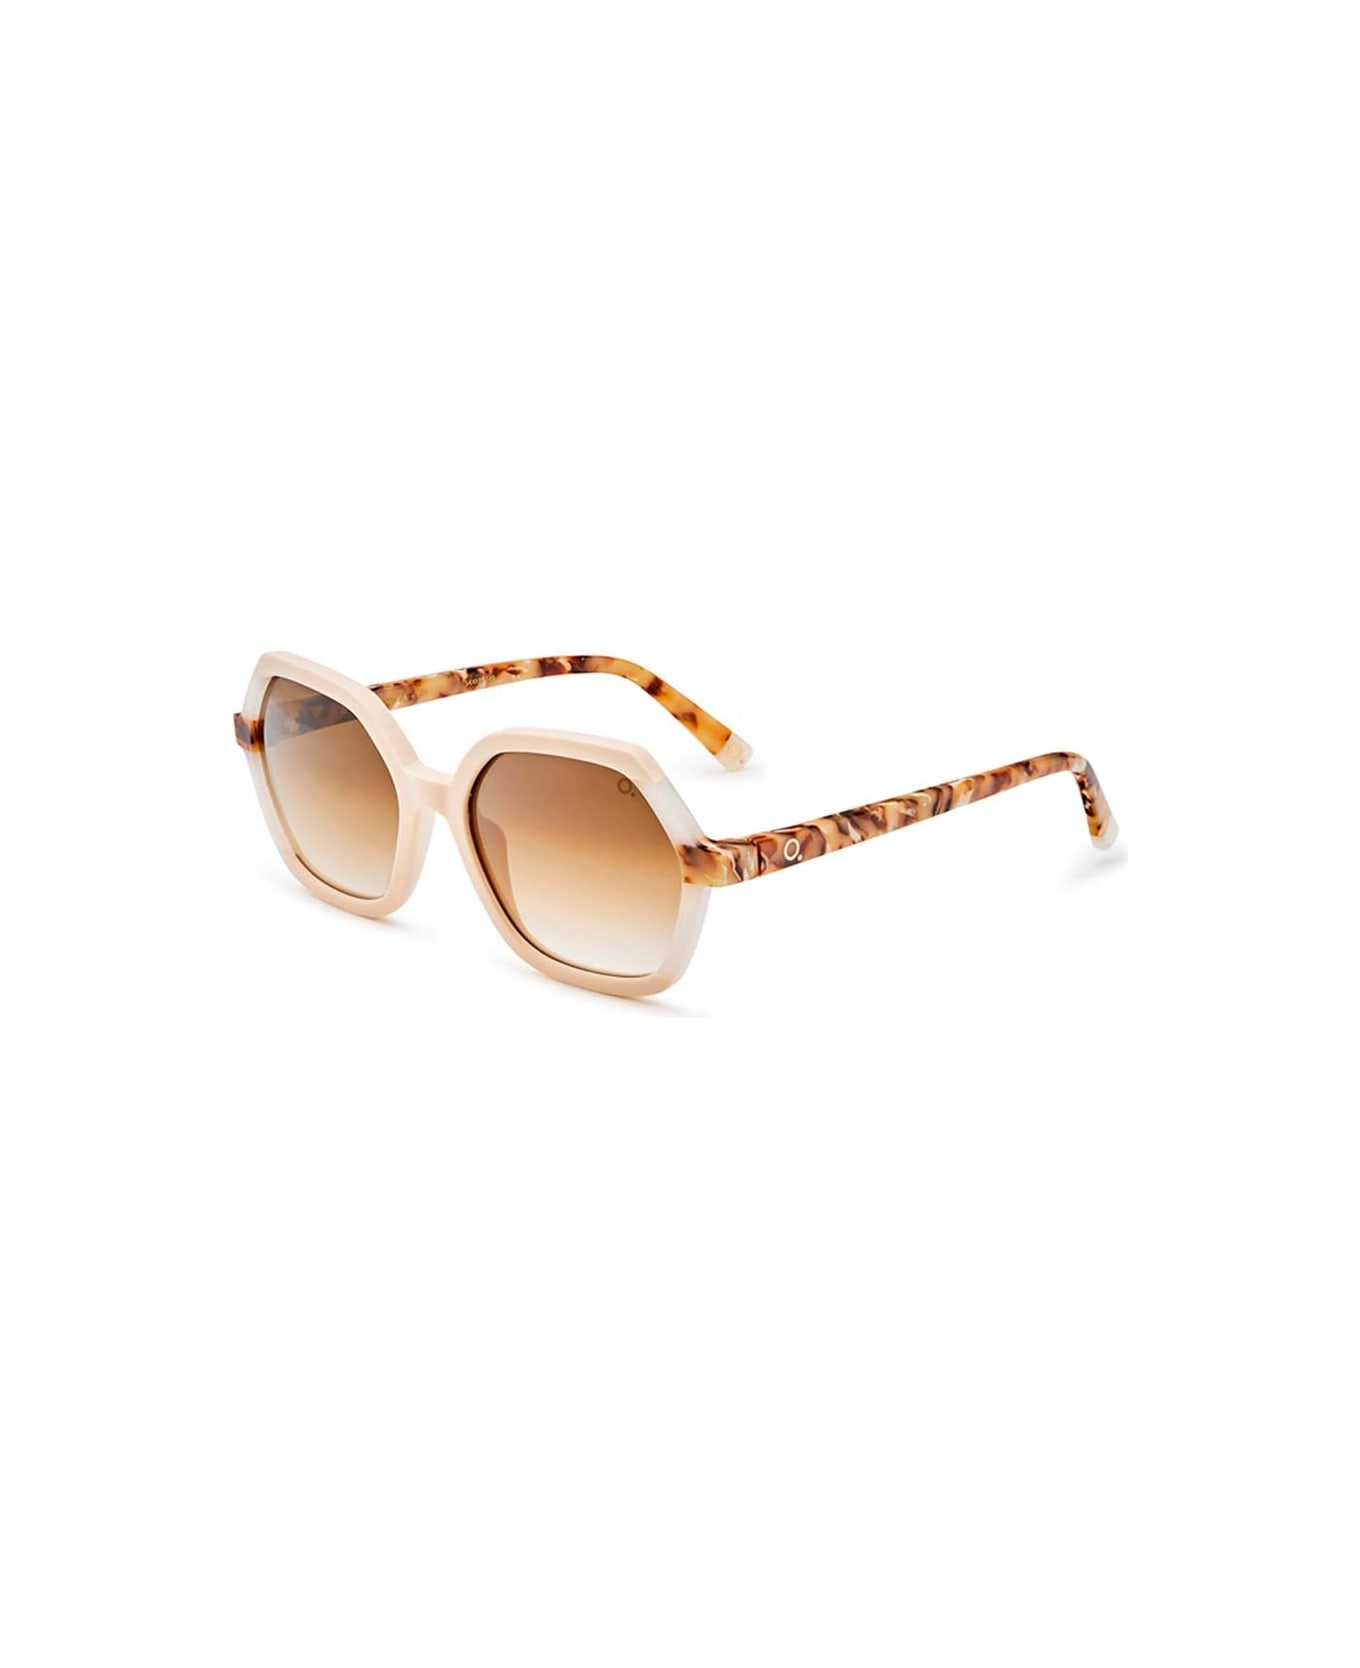 Etnia Barcelona Sunglasses - Bianco/Marrone